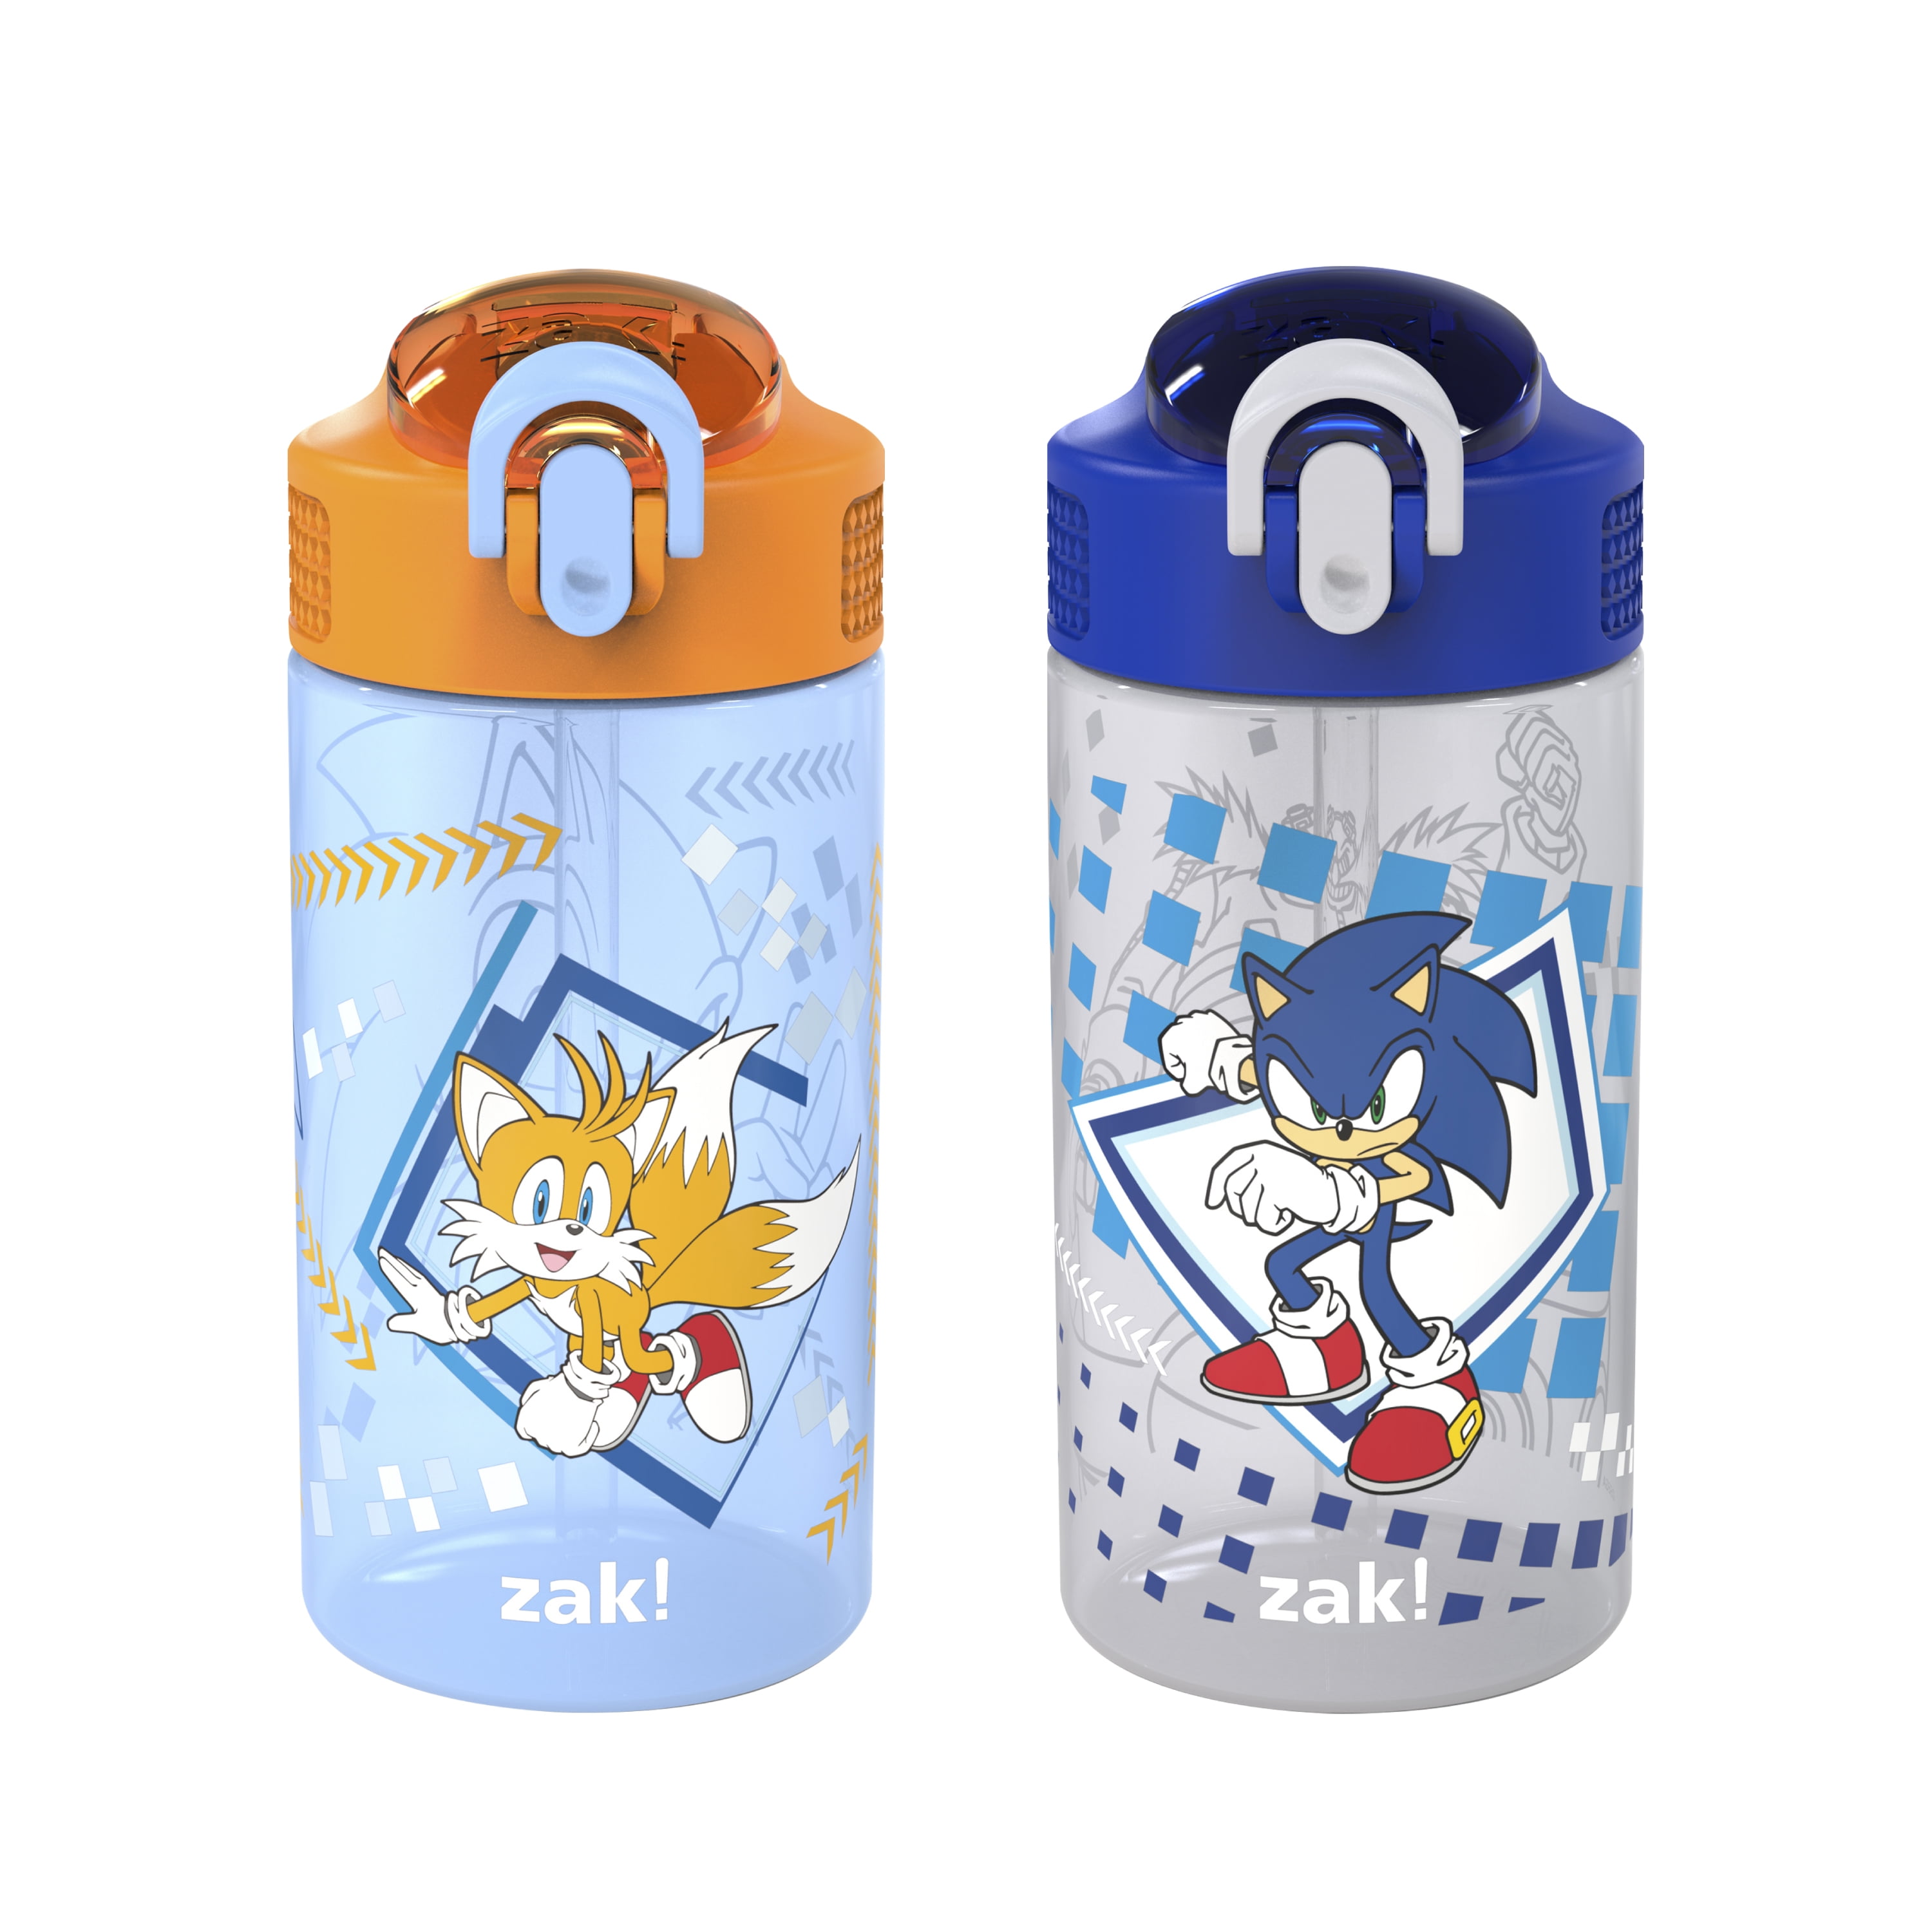 Bentgo Kids Water Bottle 2-Pack - New, Improved 2023 Leak-Proof BPA-Free 15 oz Cups for Toddlers & Children Flip-Up Safe-Sip St